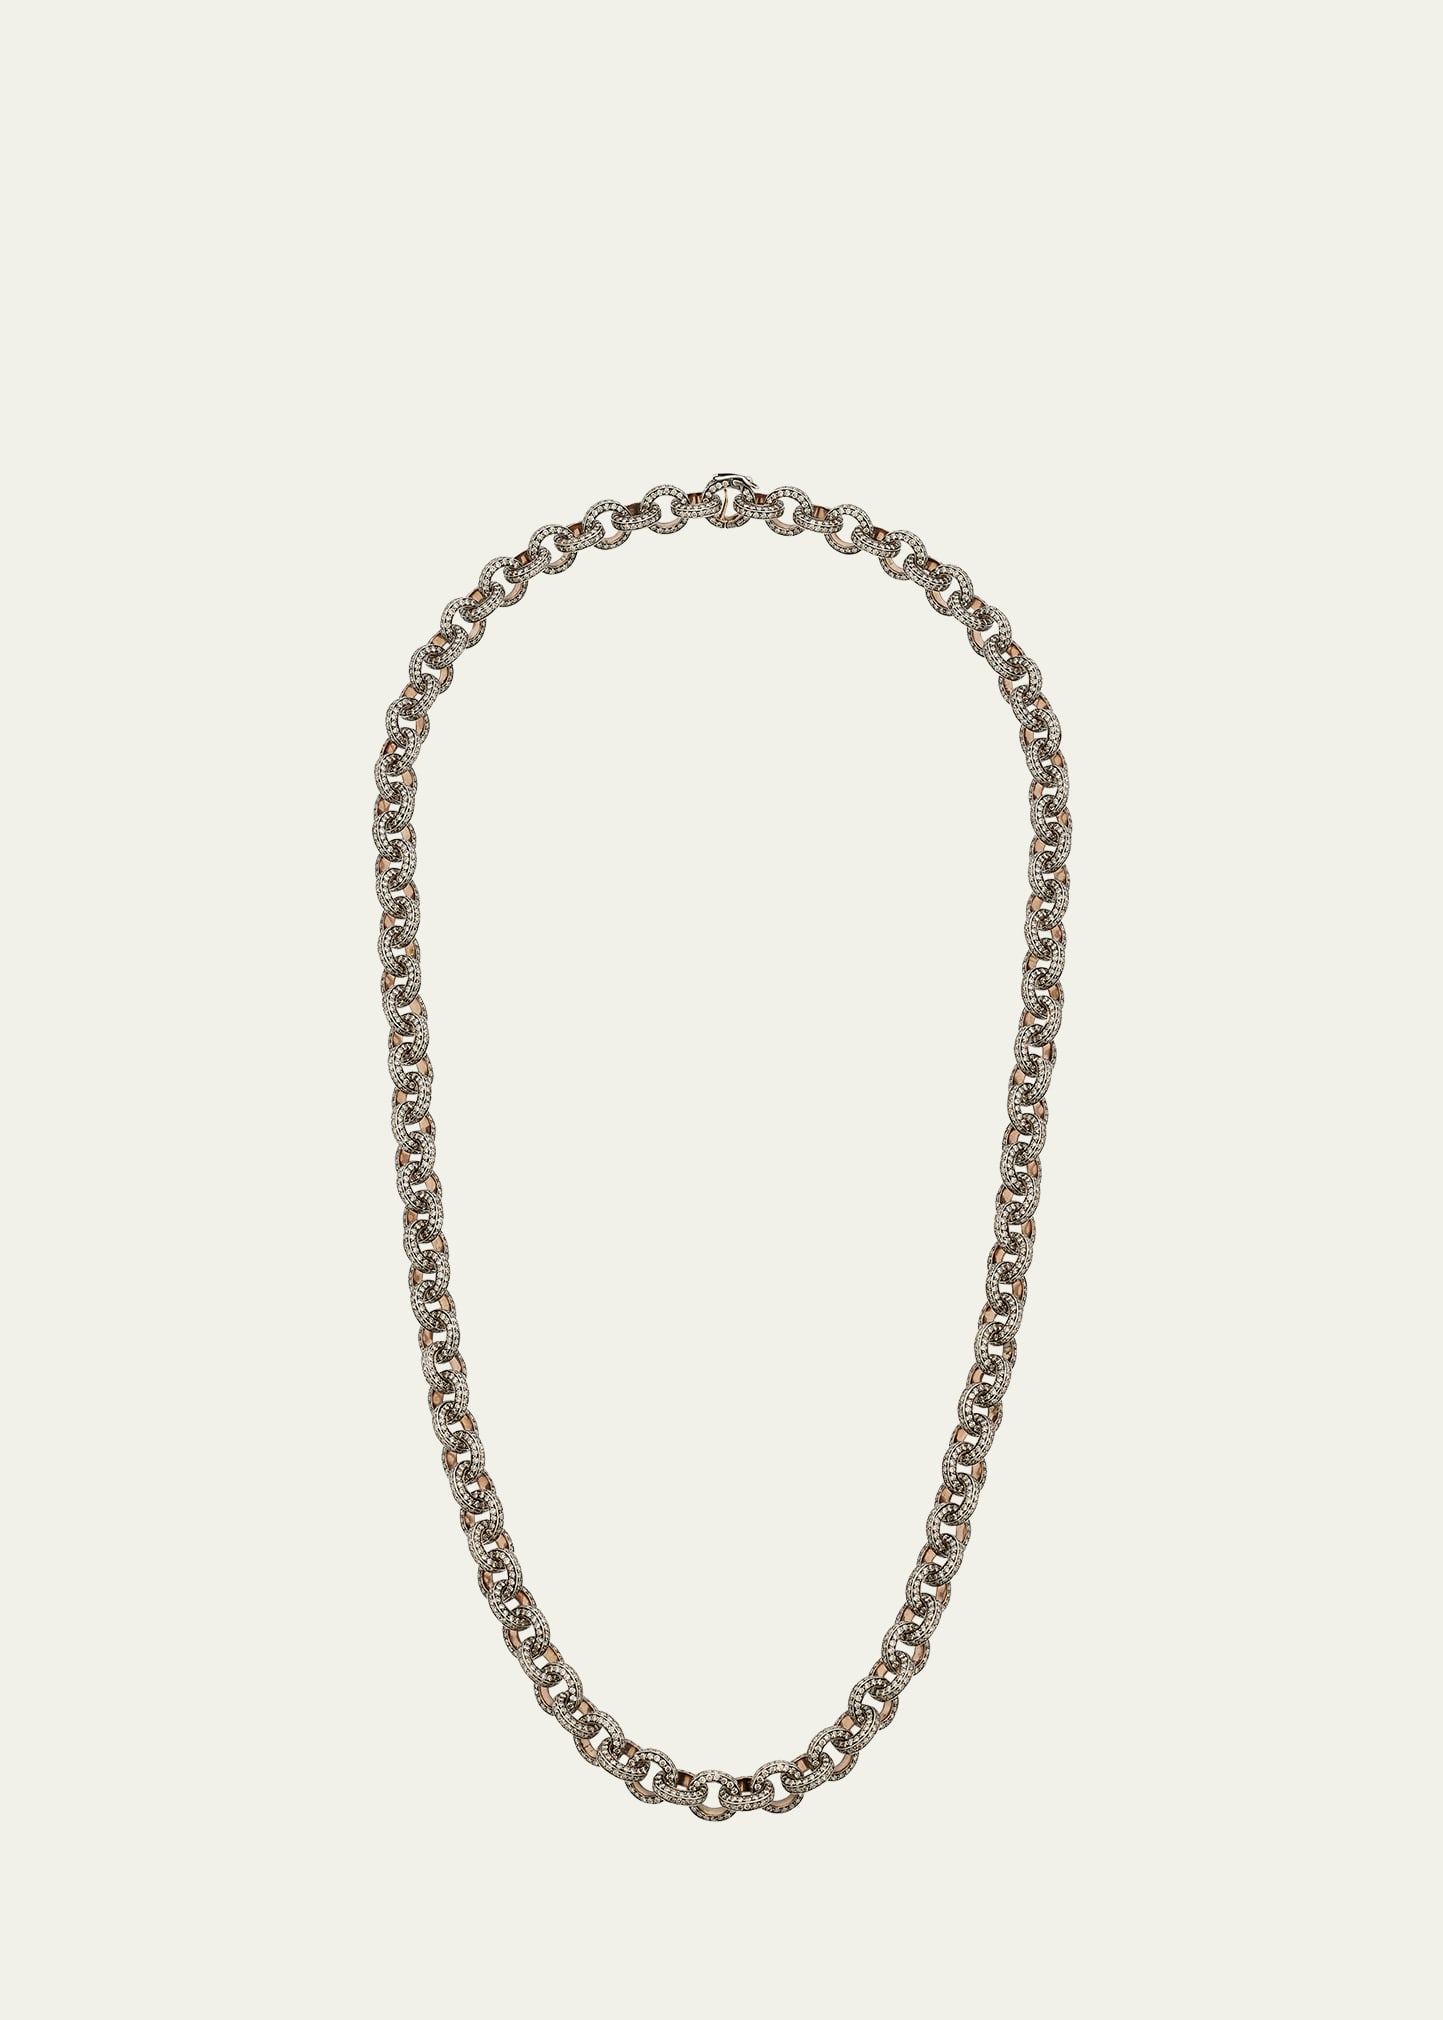 Munnu Gem Palace 18k White Gold Link Chain Necklace